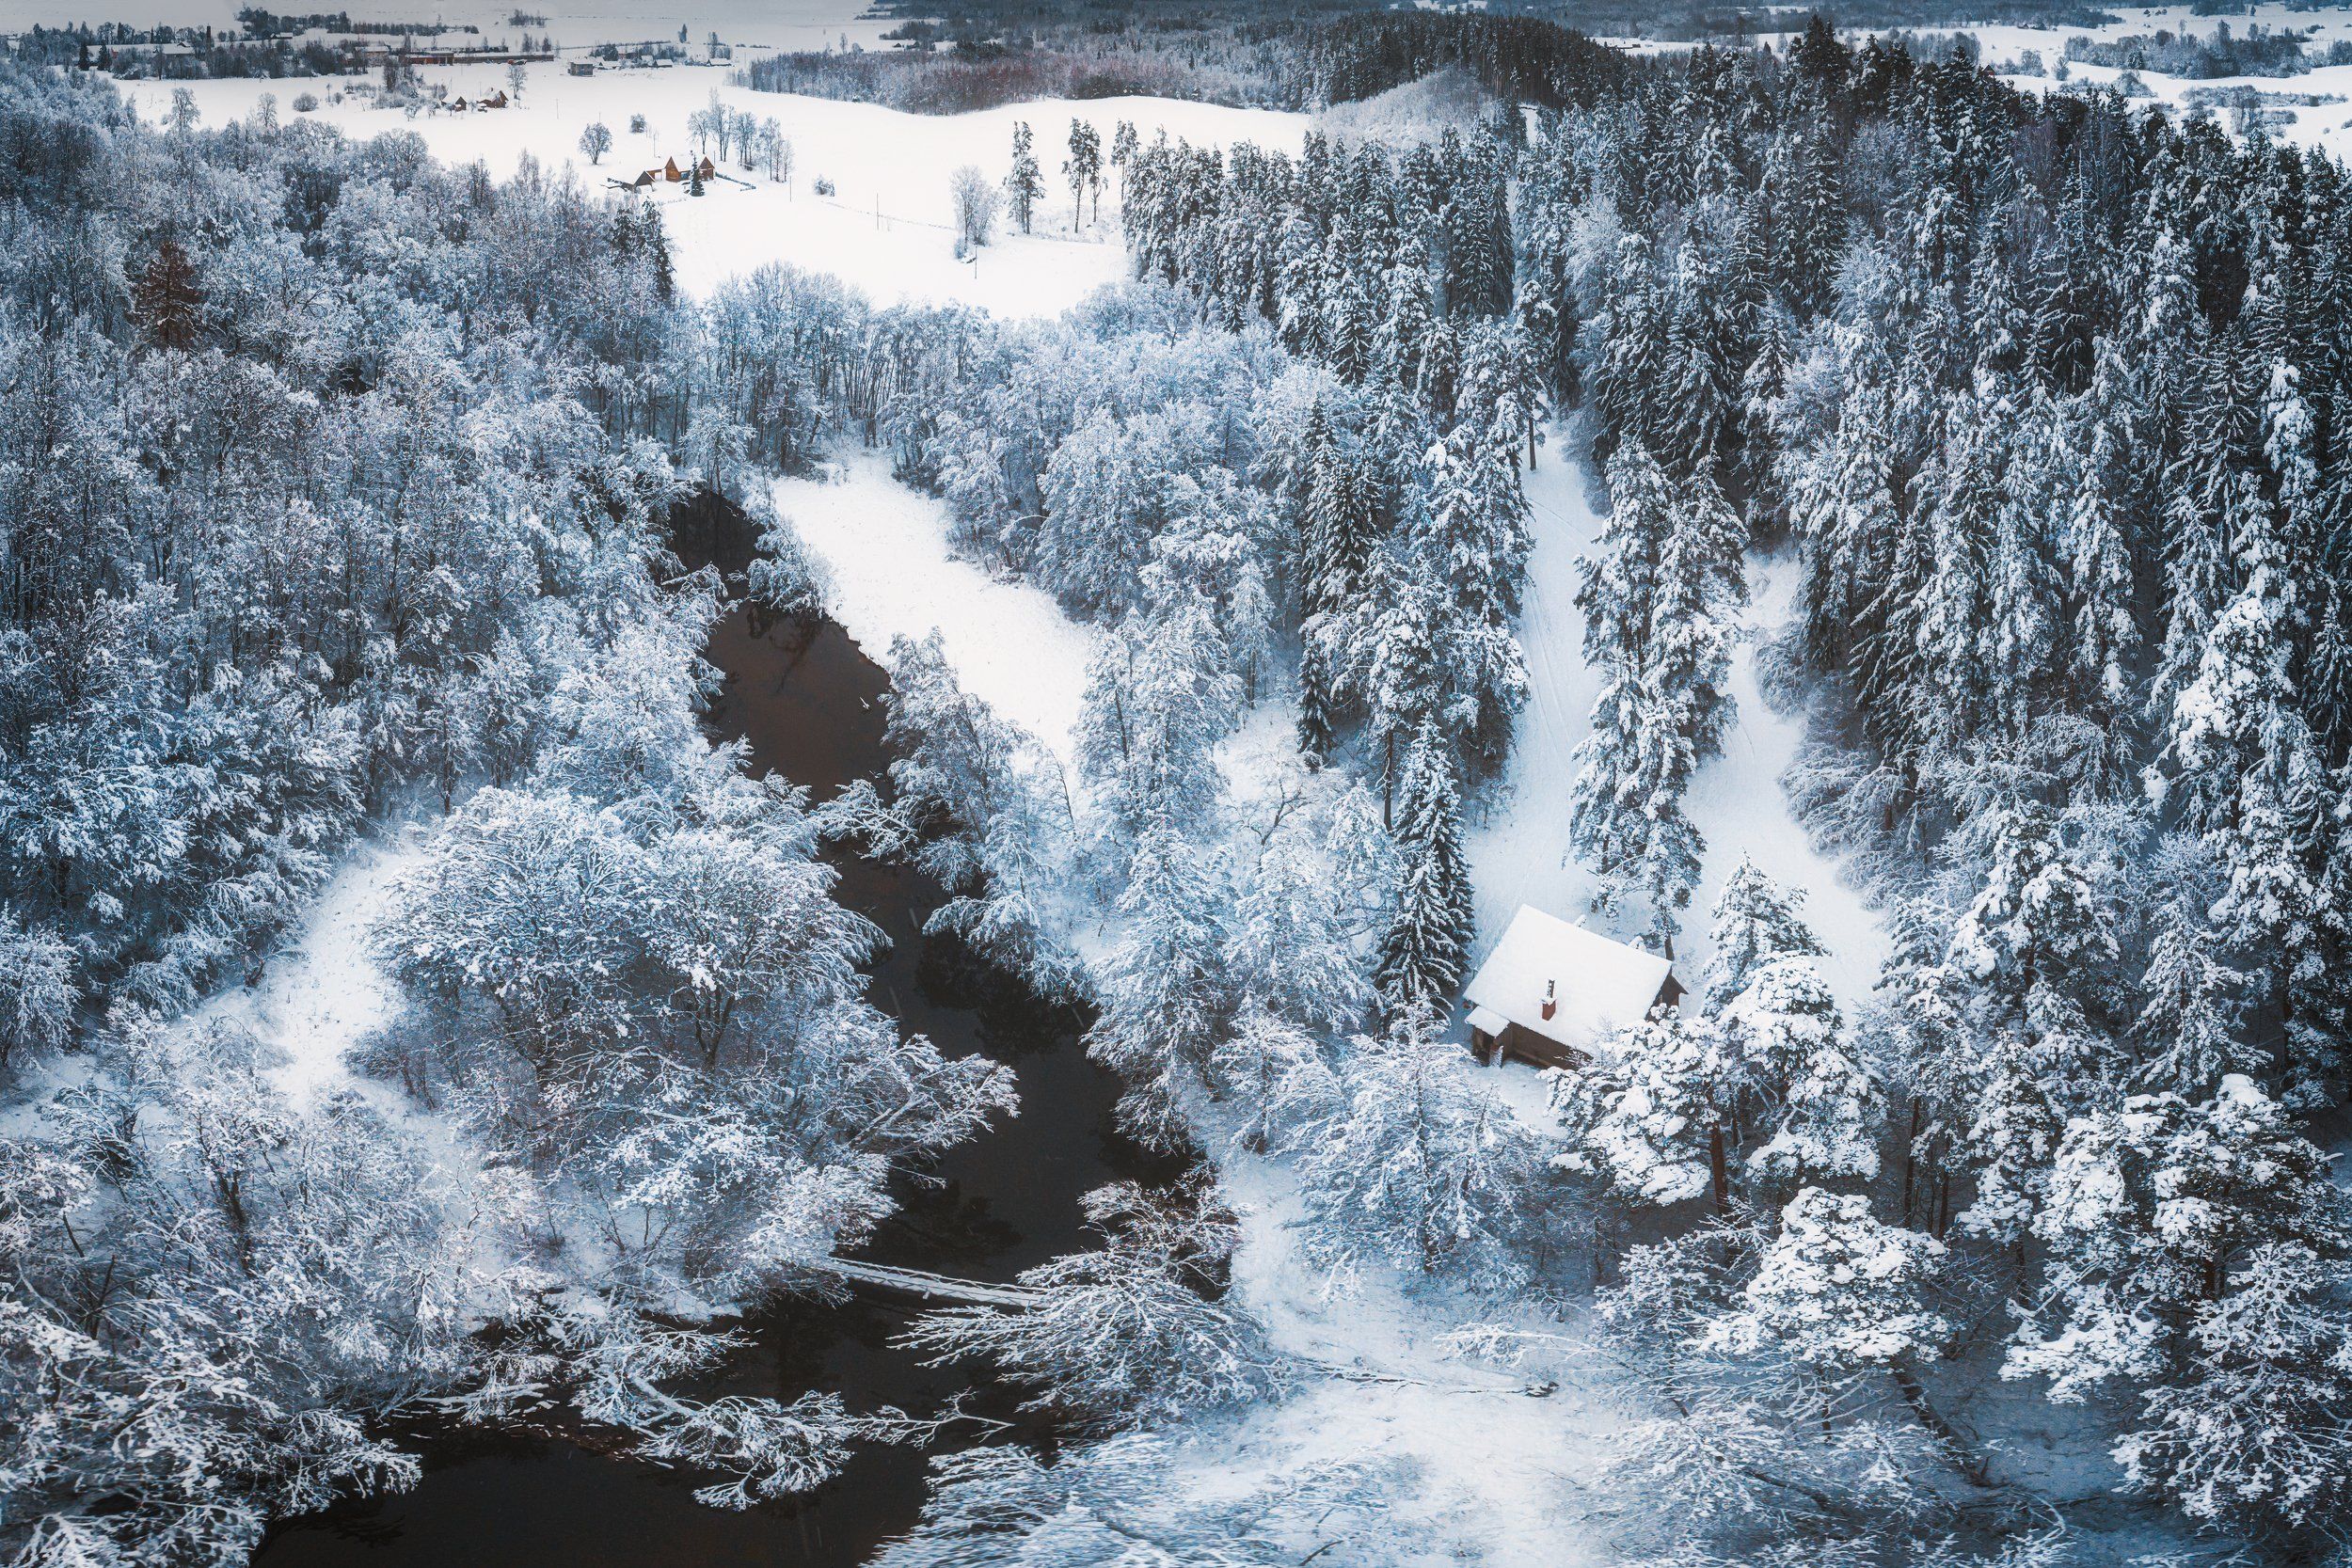 landscape,winter,snow,river,forest,trees,nature,frozen, Olegs Bucis